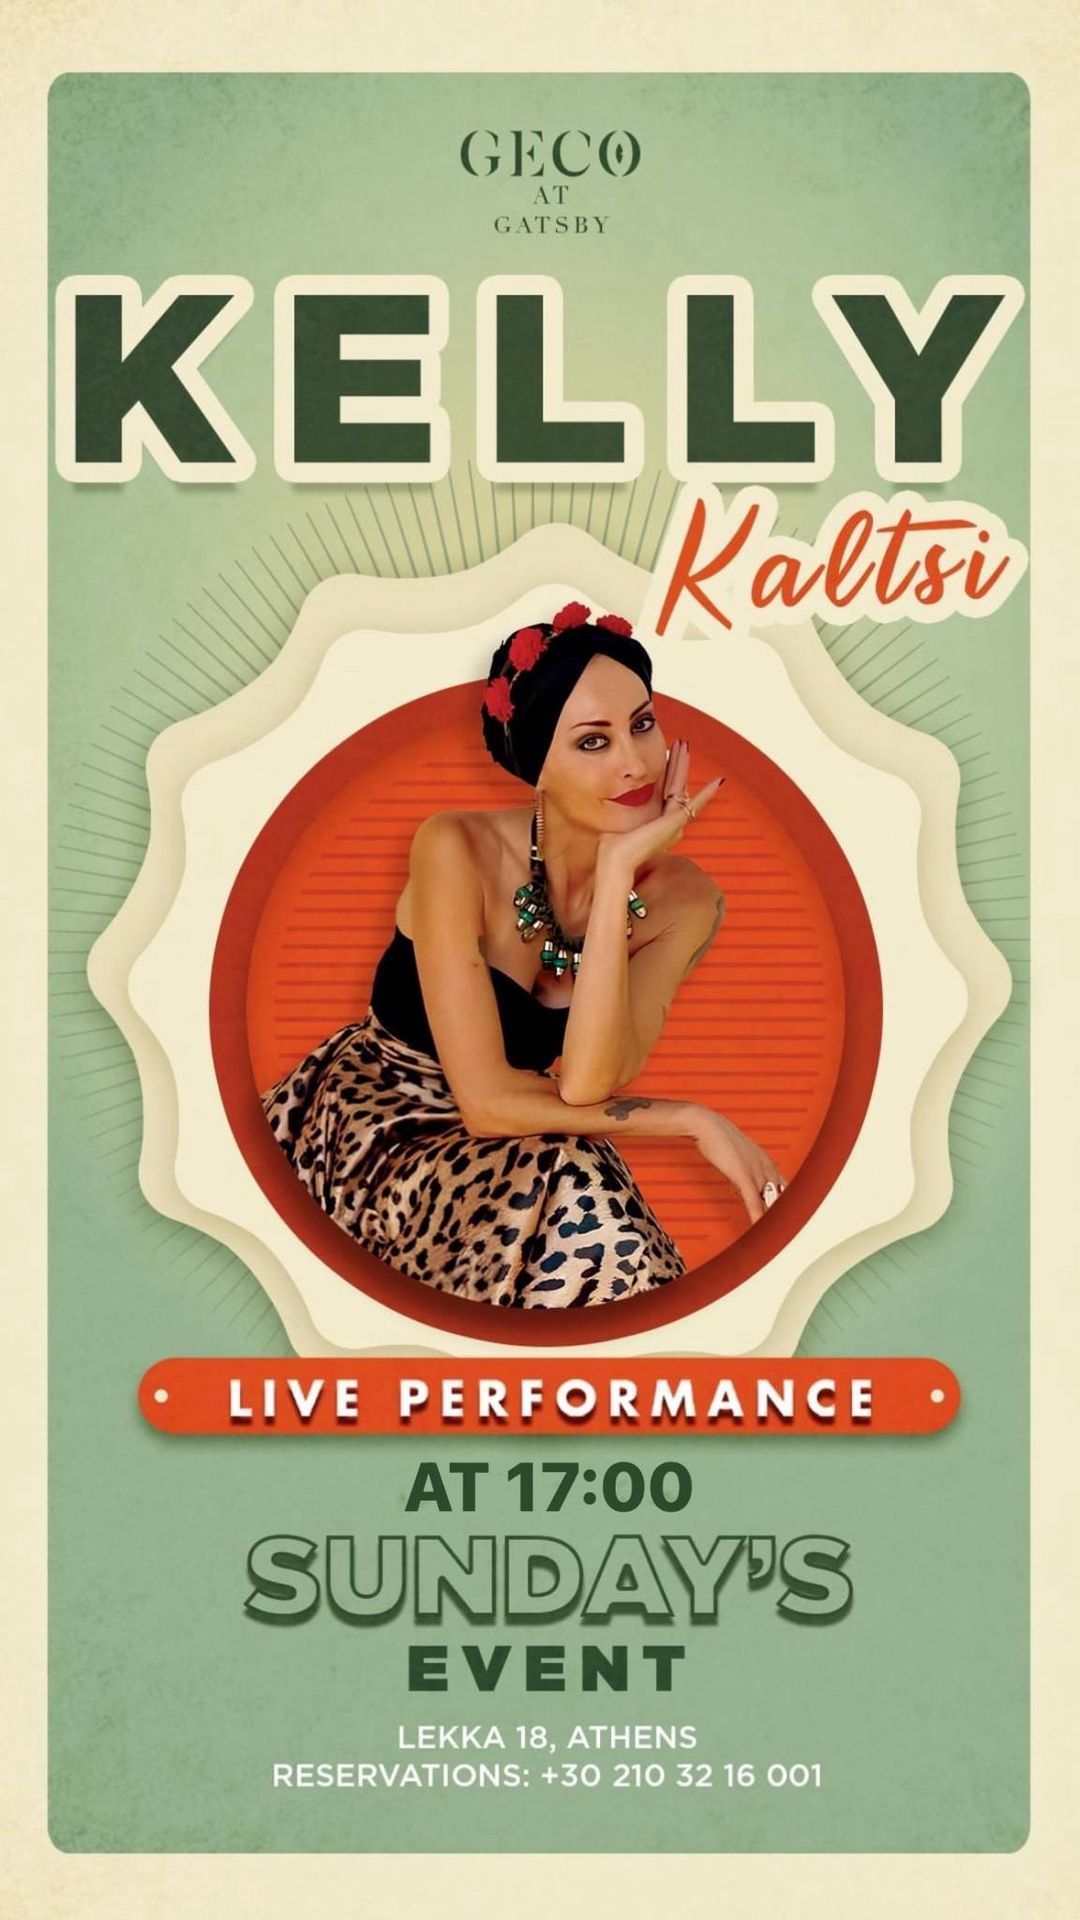 Live performance by Kelly Kaltsi